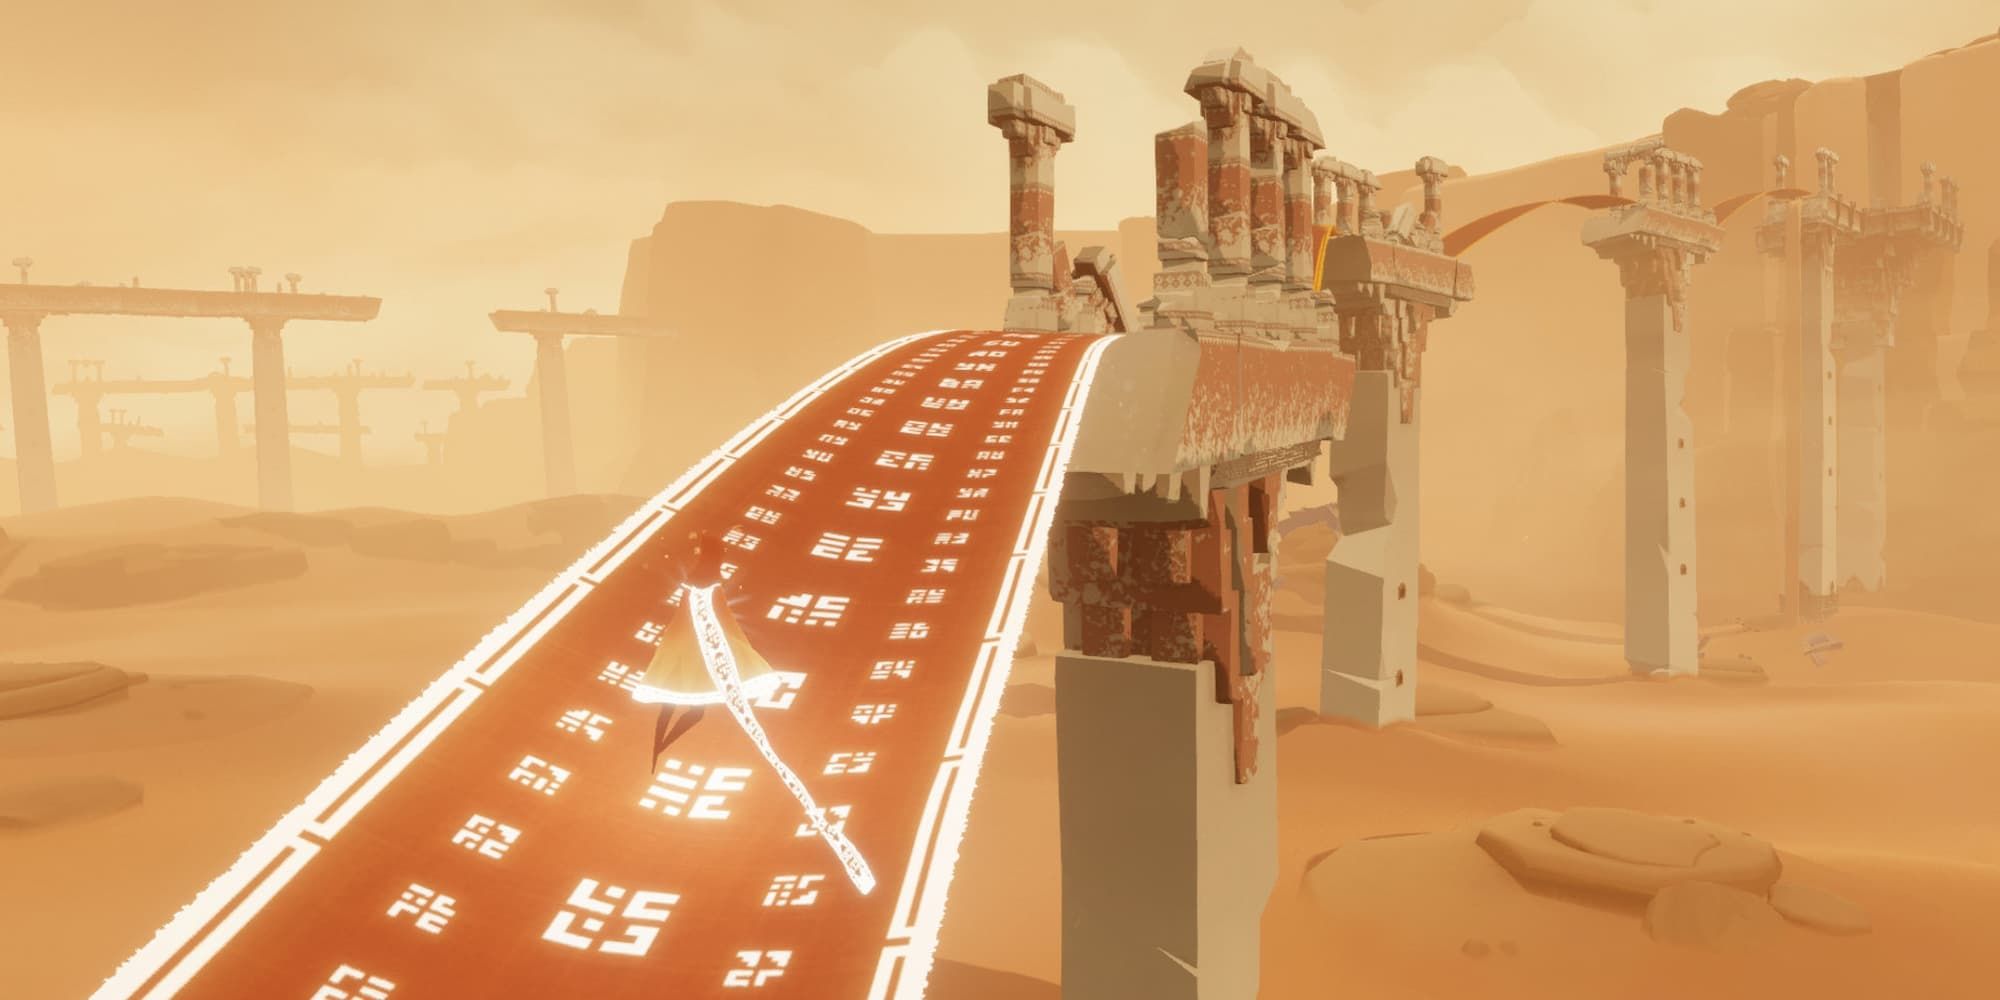 The traveller crossing bridges made of fabric in the desert